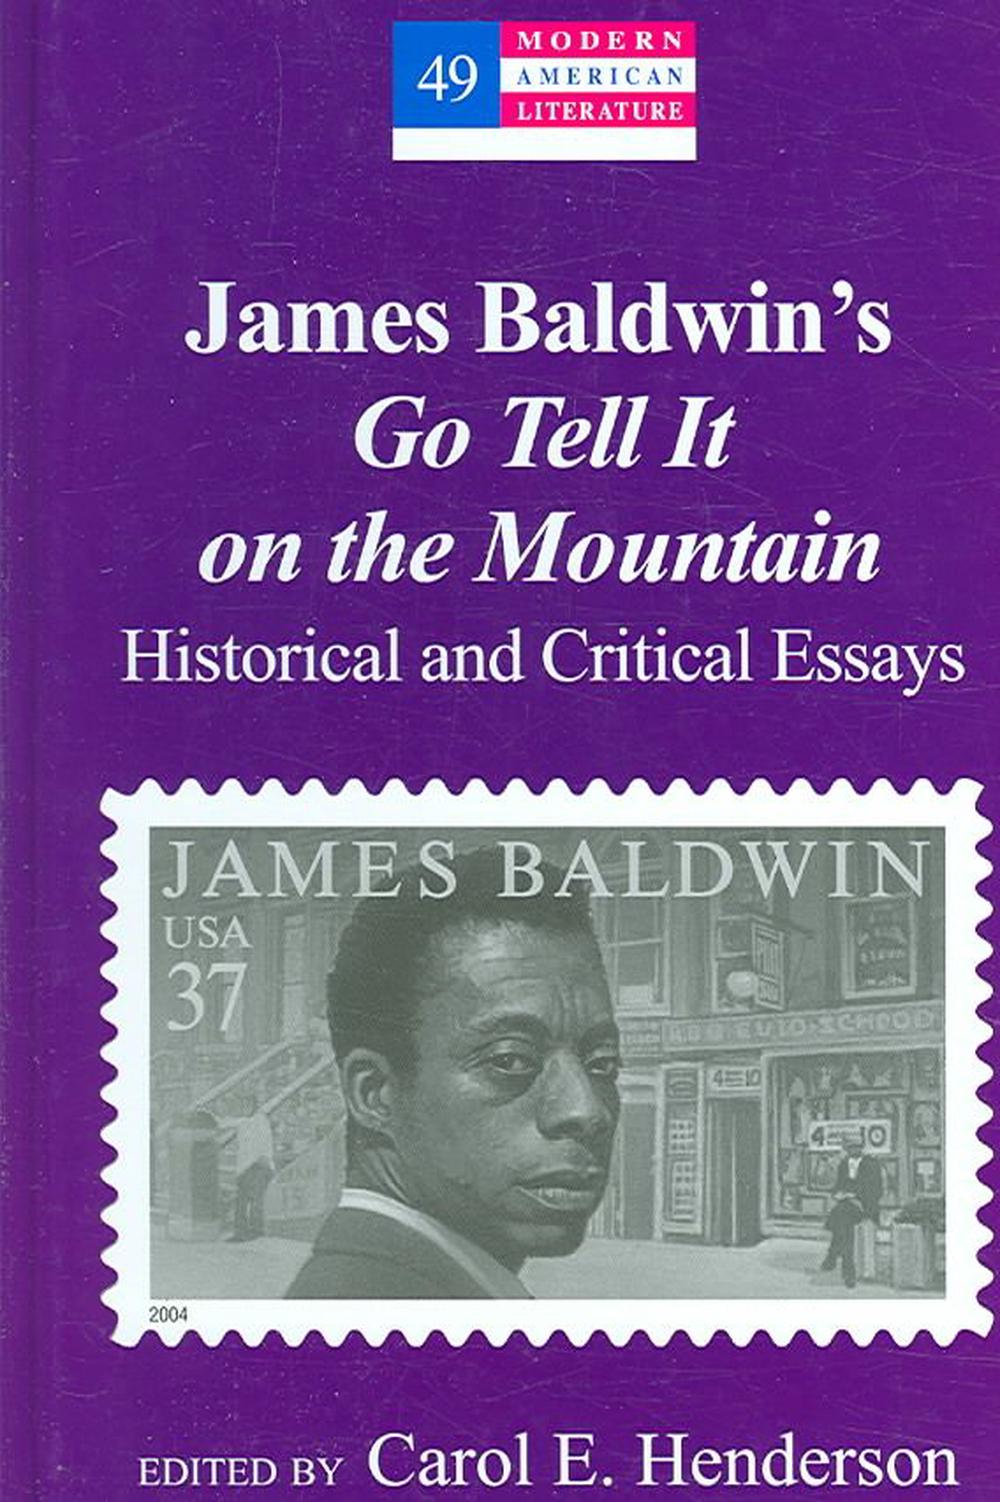 james baldwin collected essays summary